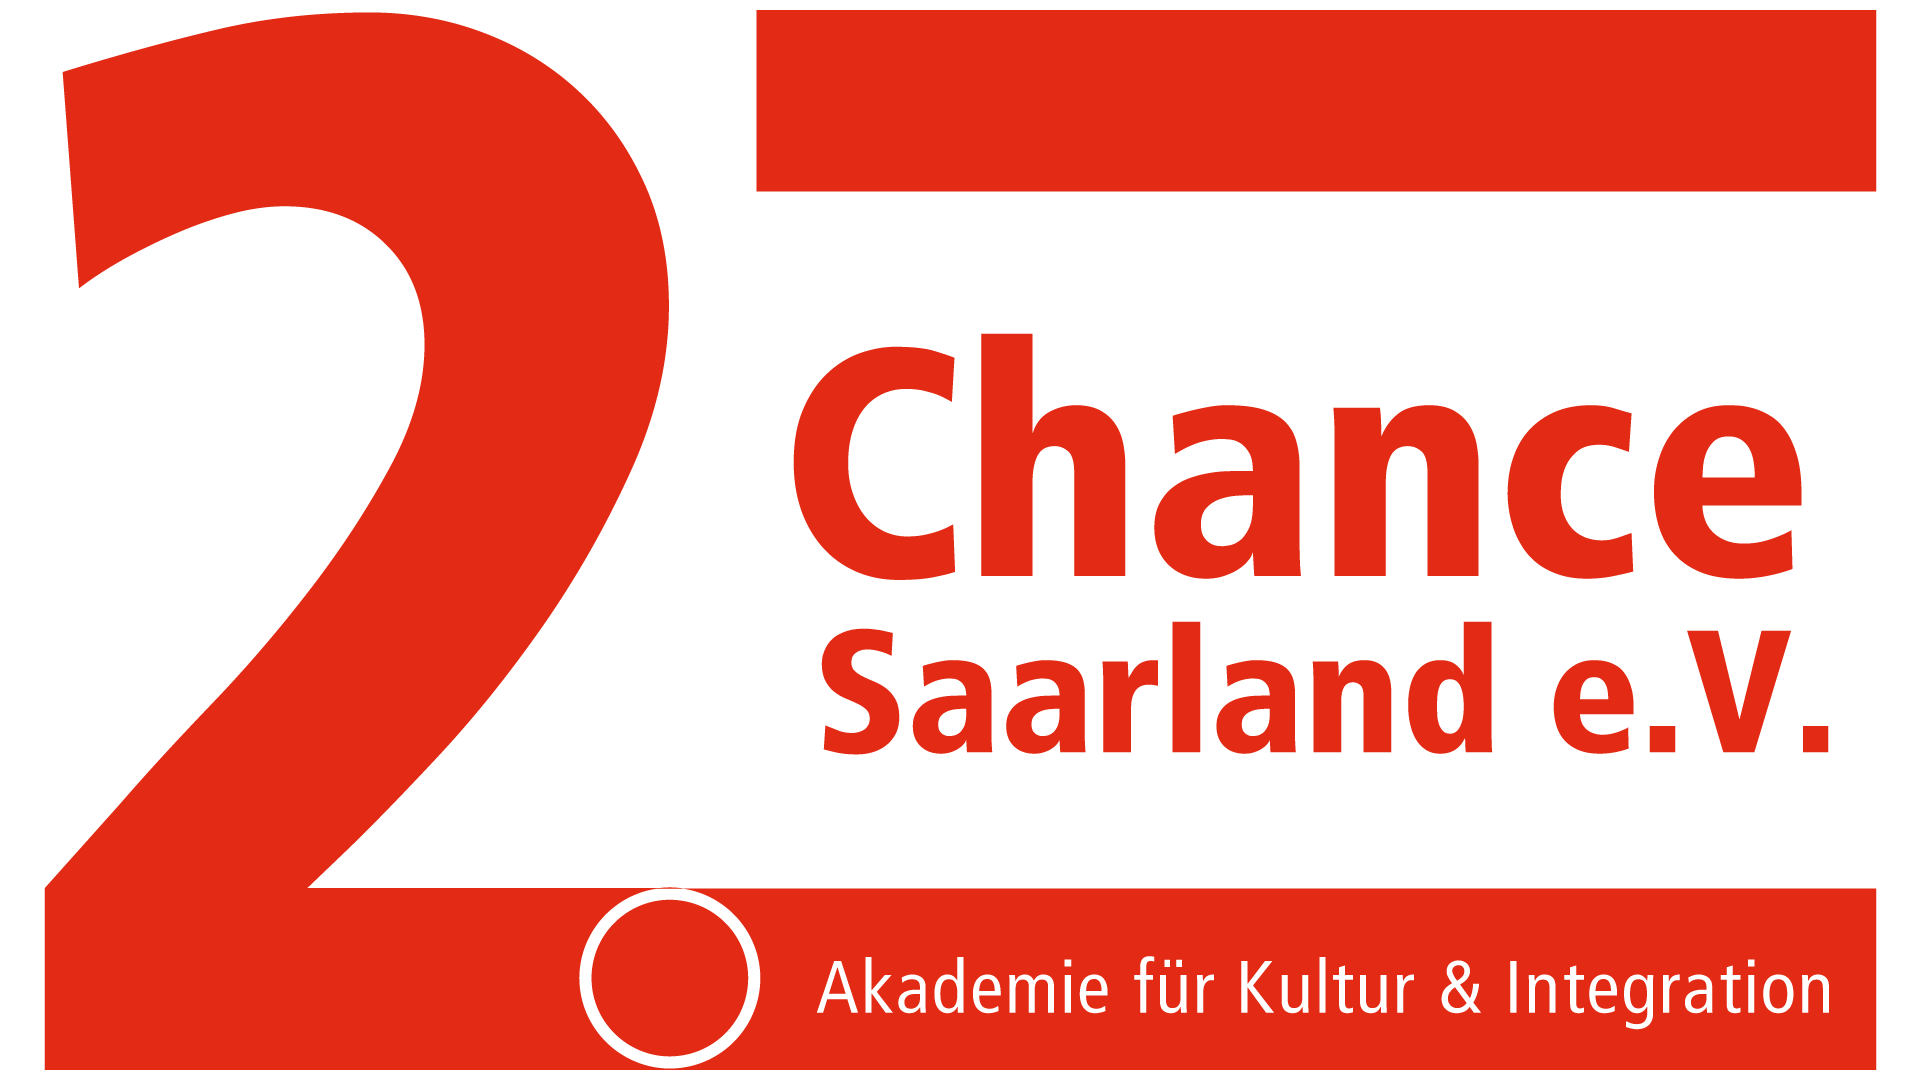 2. Chance Saarland e.V.